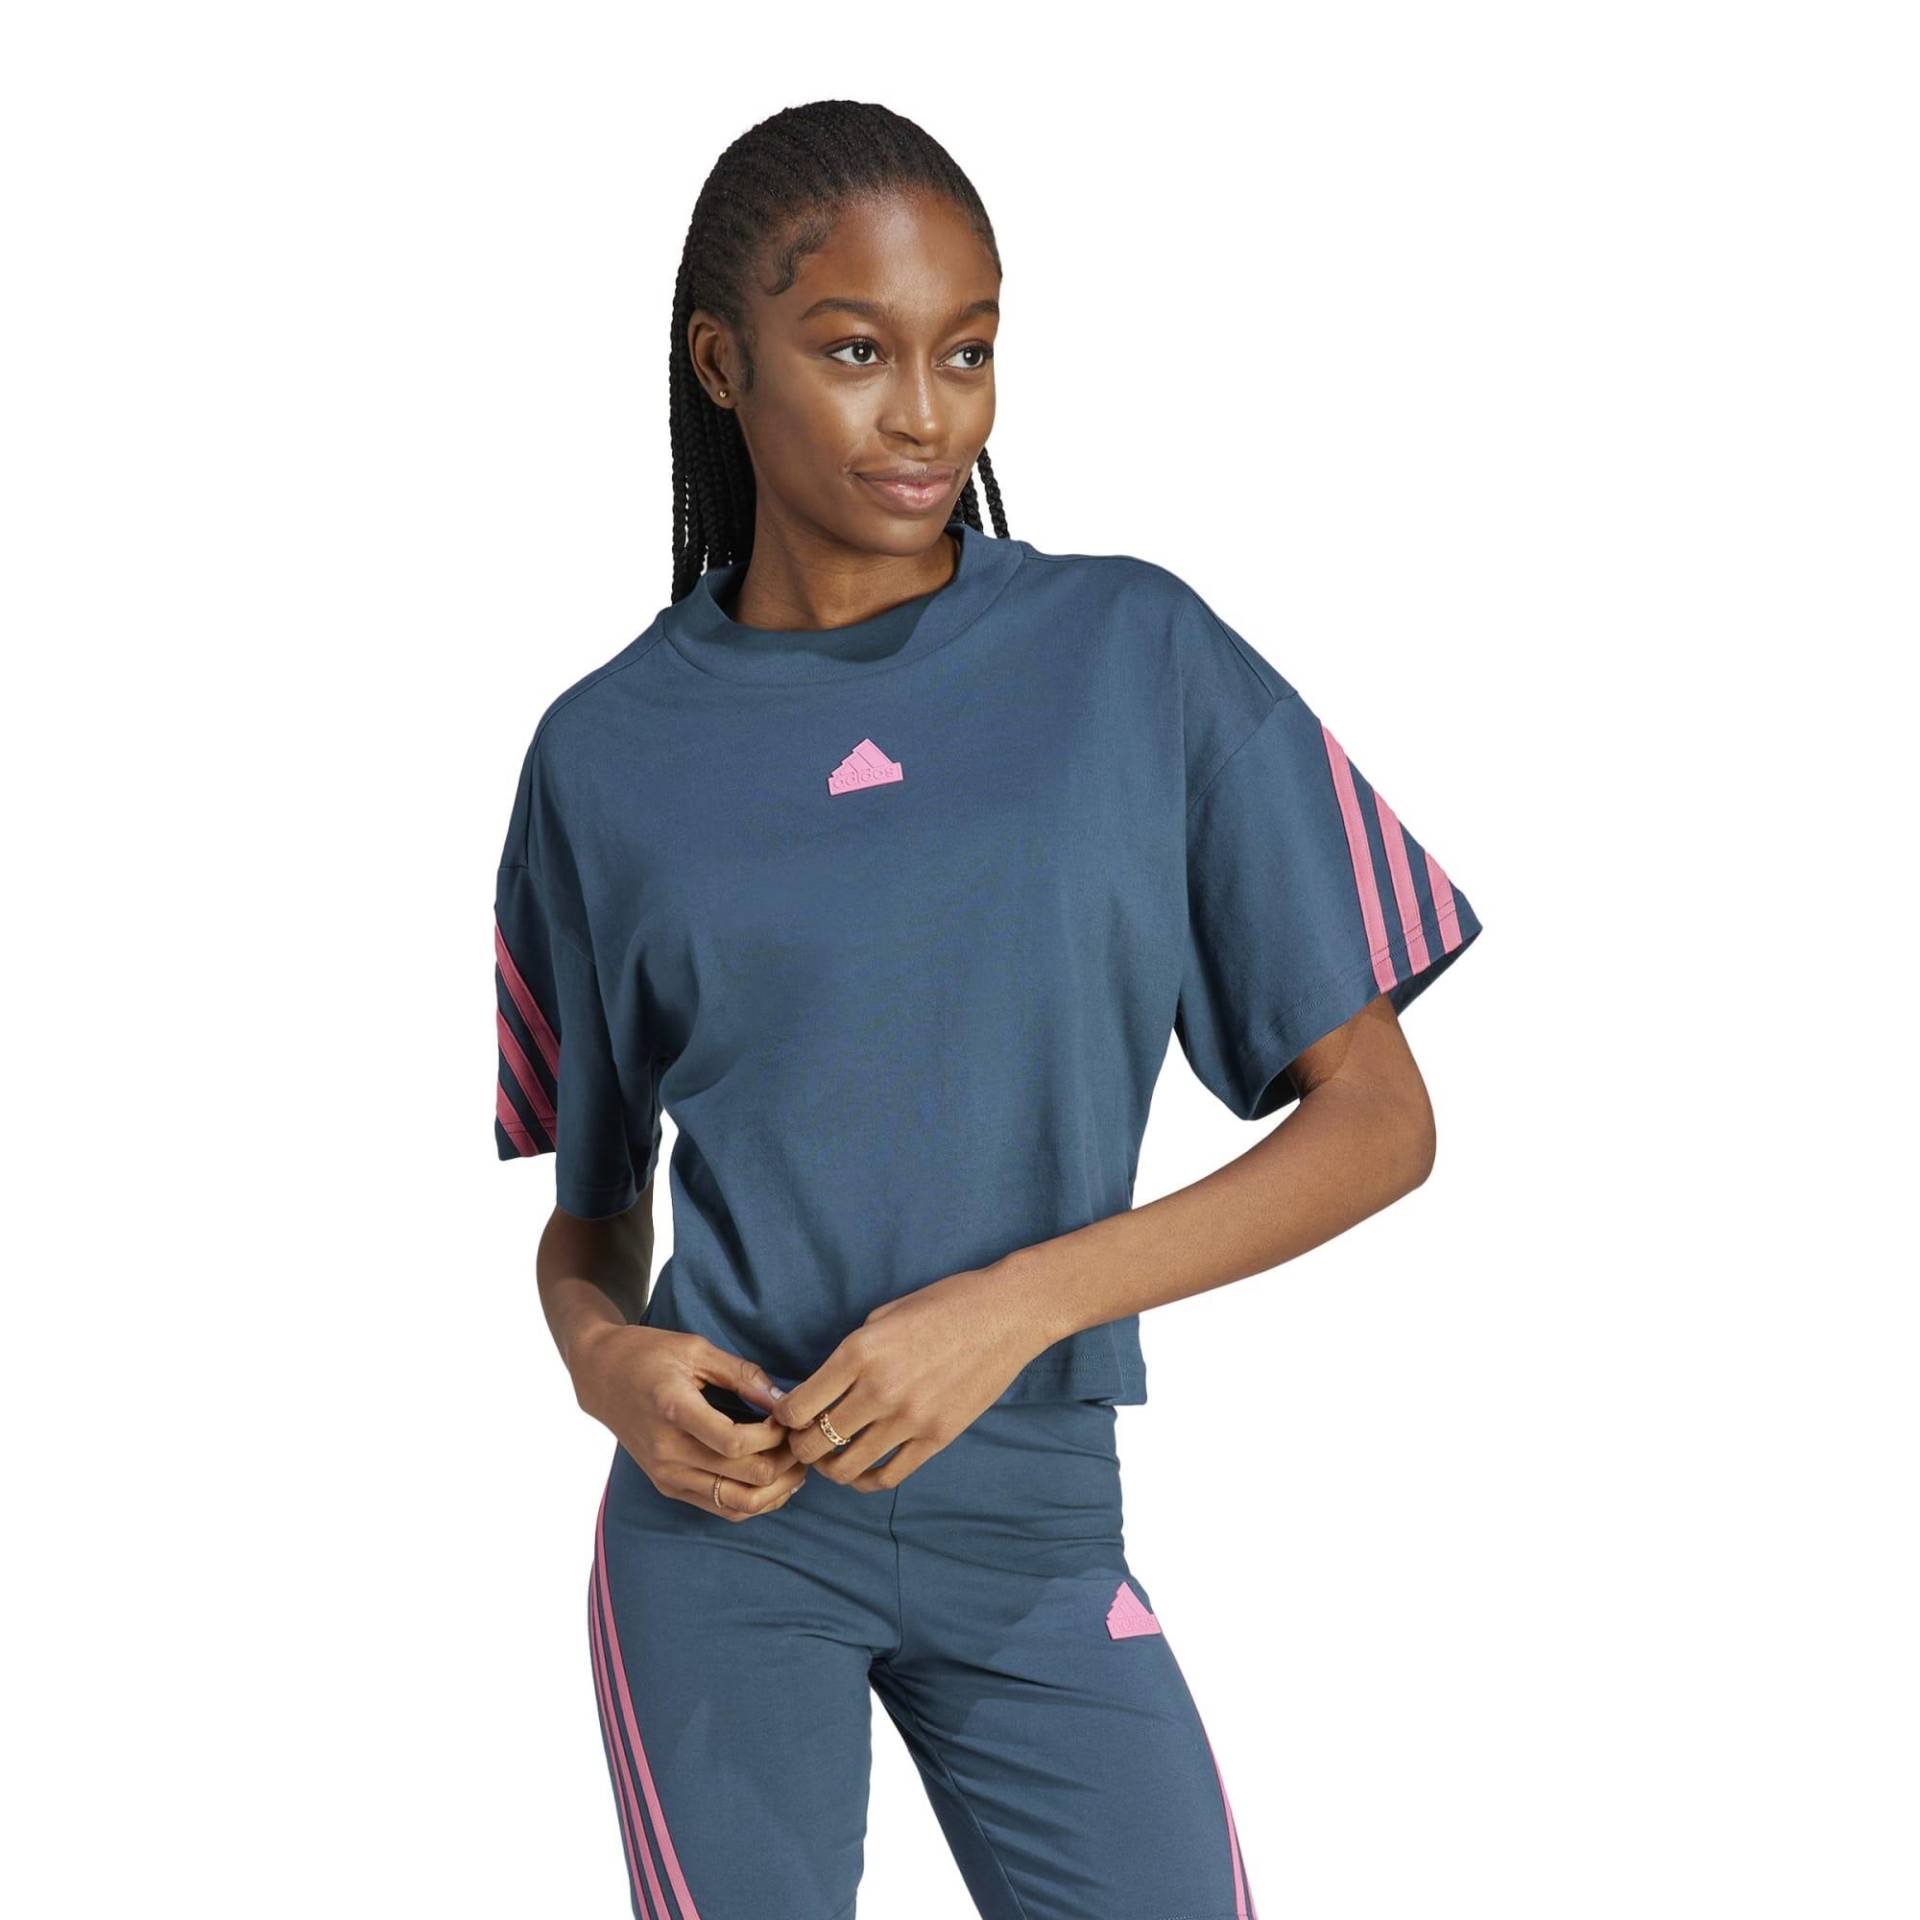 Adidas T-Shirt Damen - Future Icons dunkelblau von Adidas